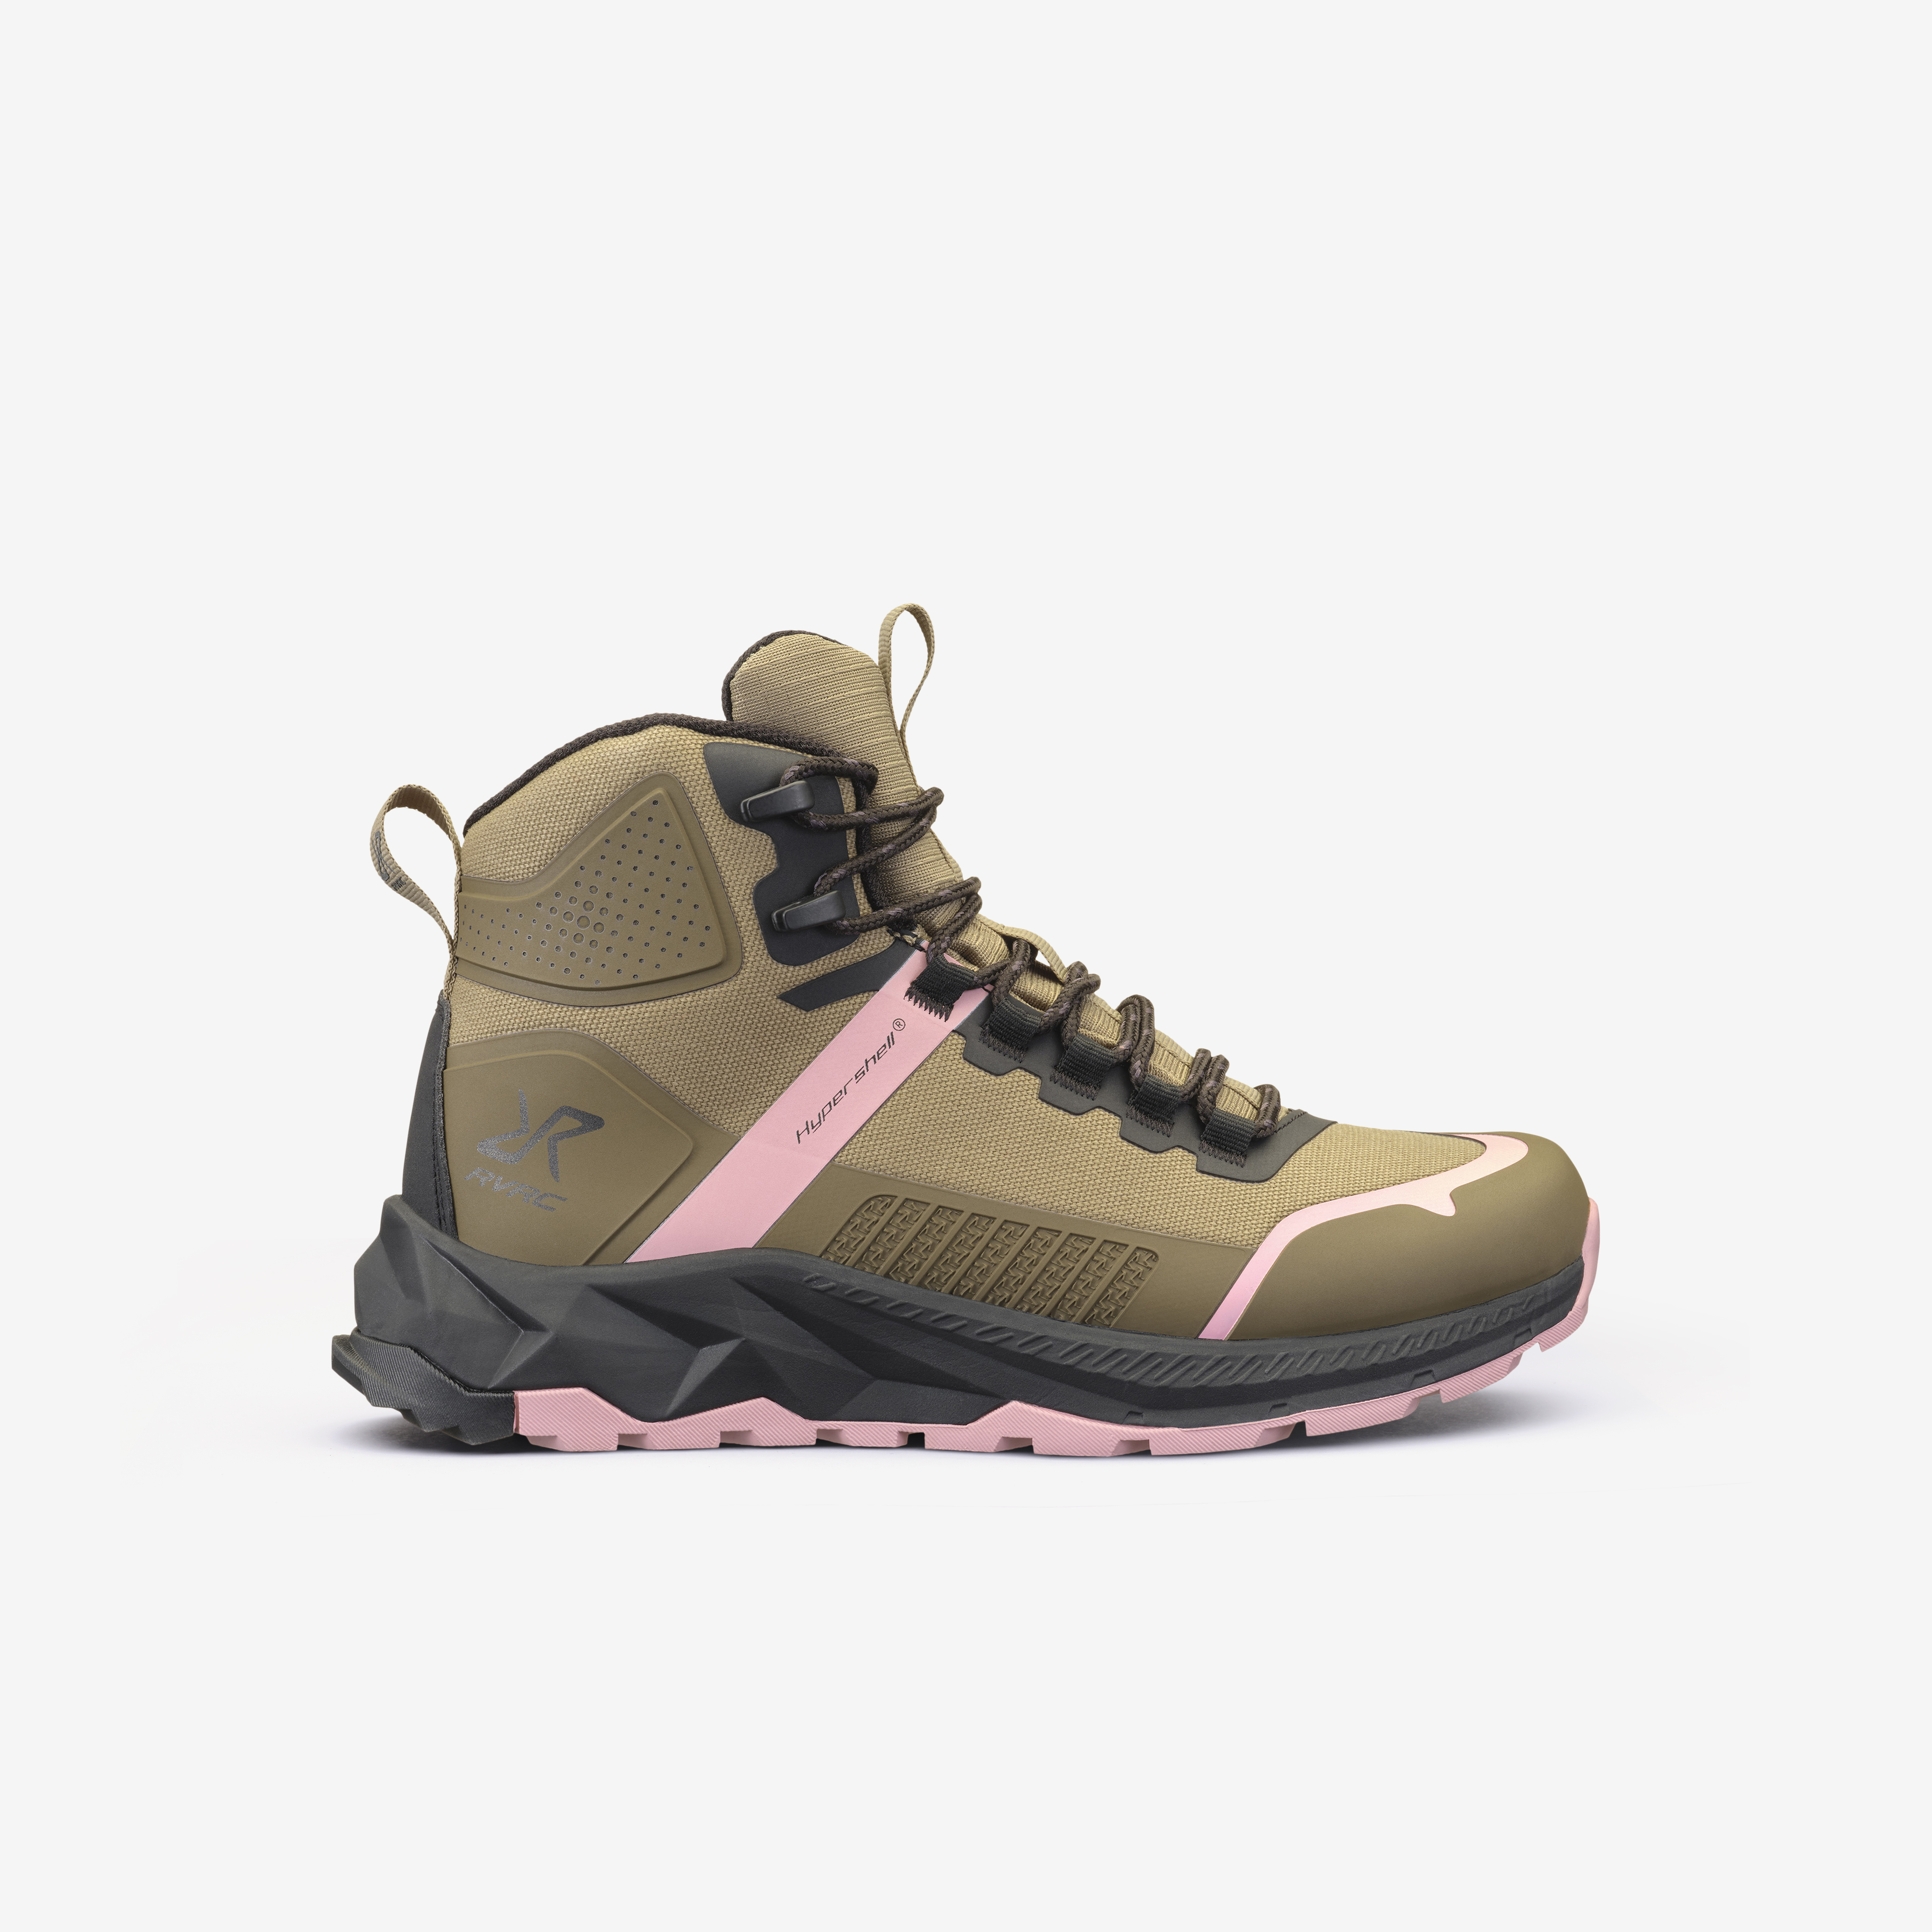 Phantom Trail Mid Waterproof Hiking Boots Khaki/Dusty Pink Women